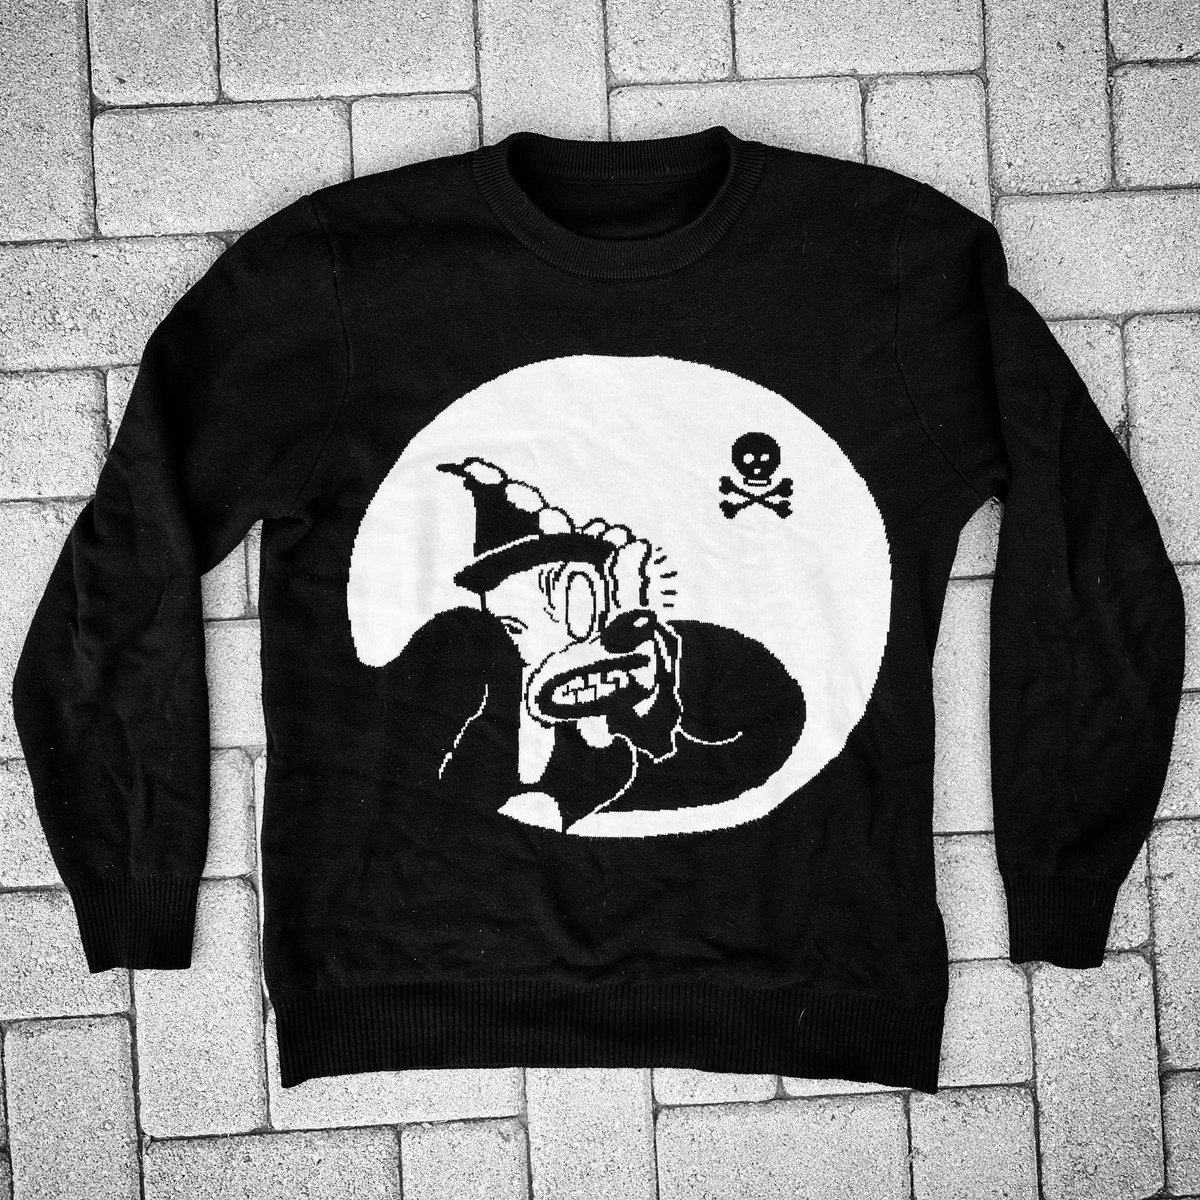 ☠️Koko’s Earth Control☠️
.
Limited edition Fleischer Studios knit sweaters available at rockinpins.com/product/koko-t…
.
 #fleischerstudios #maxfleischer #cartoon #animation #kokotheclown #bettyboop #ghostemane #clown #knitsweater